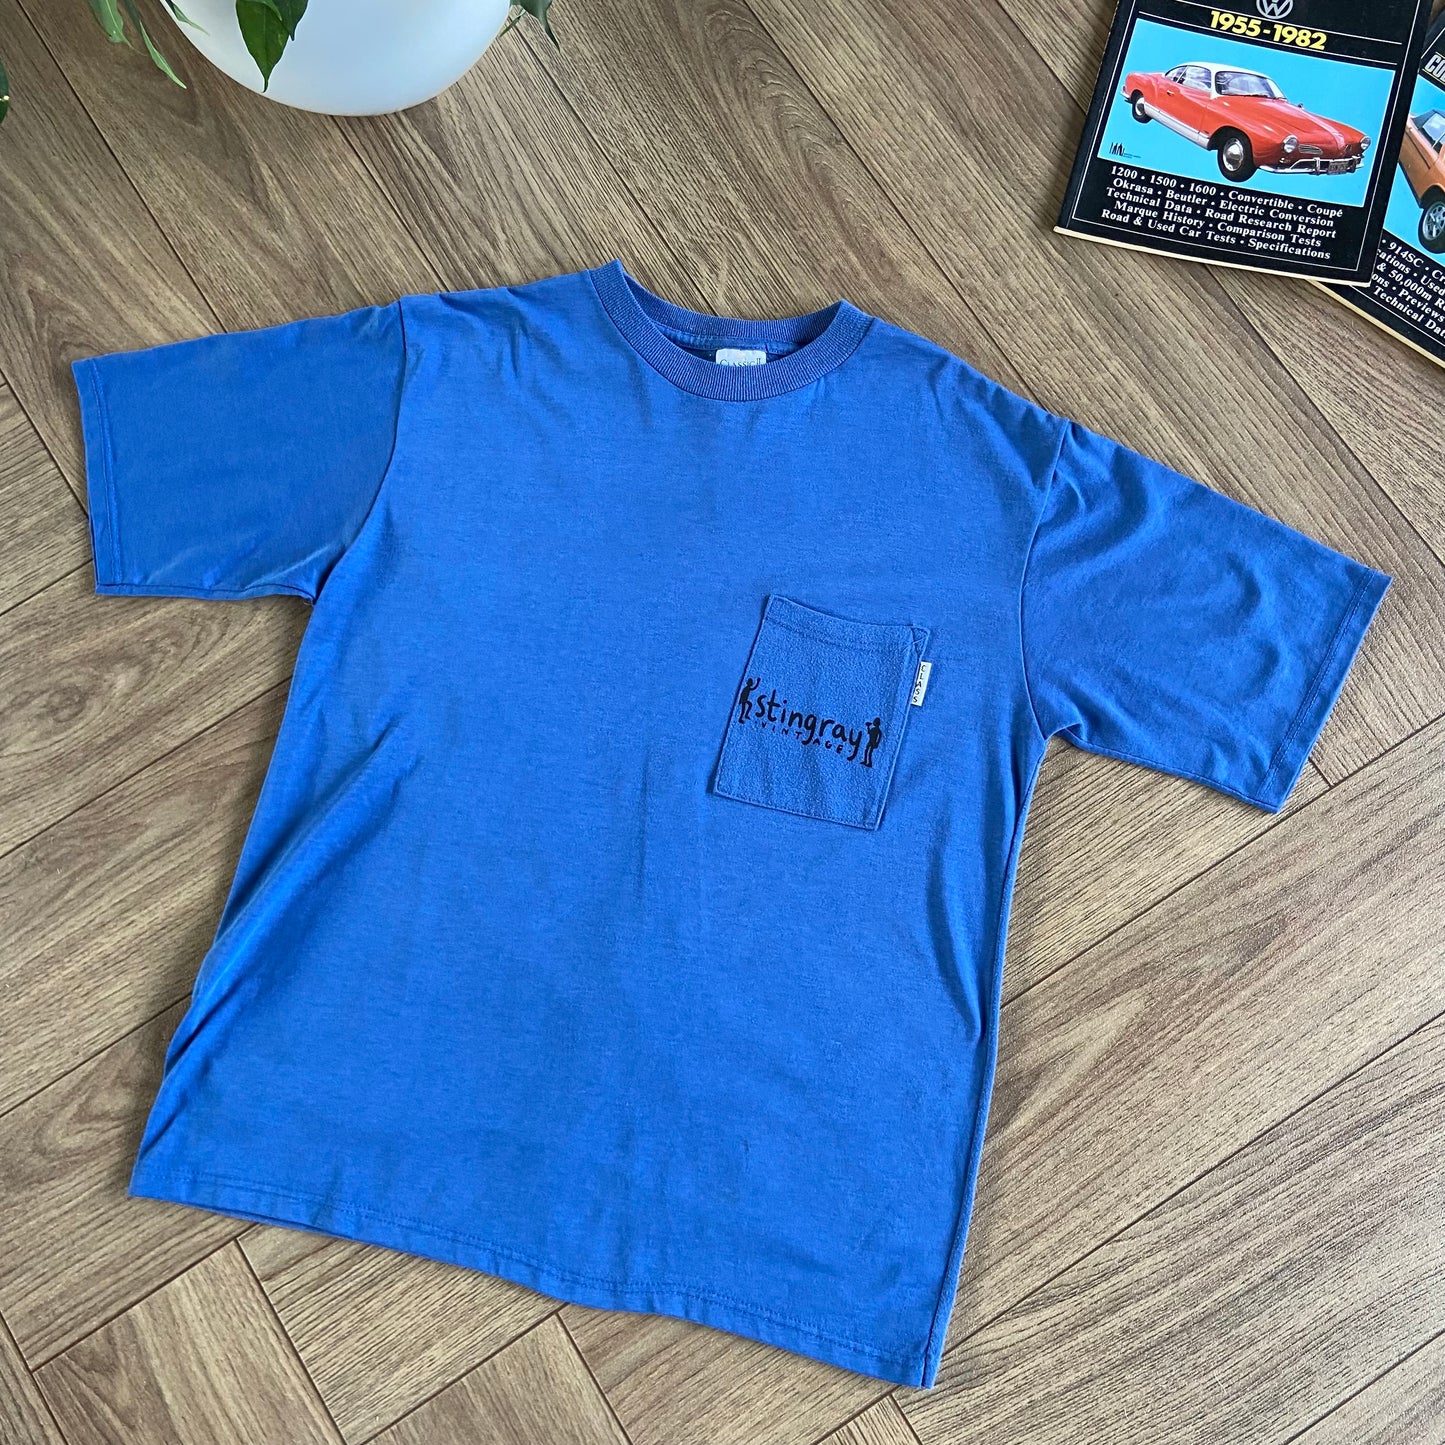 Stingray Reimagined “Barbican” T Shirt, Size L Blue